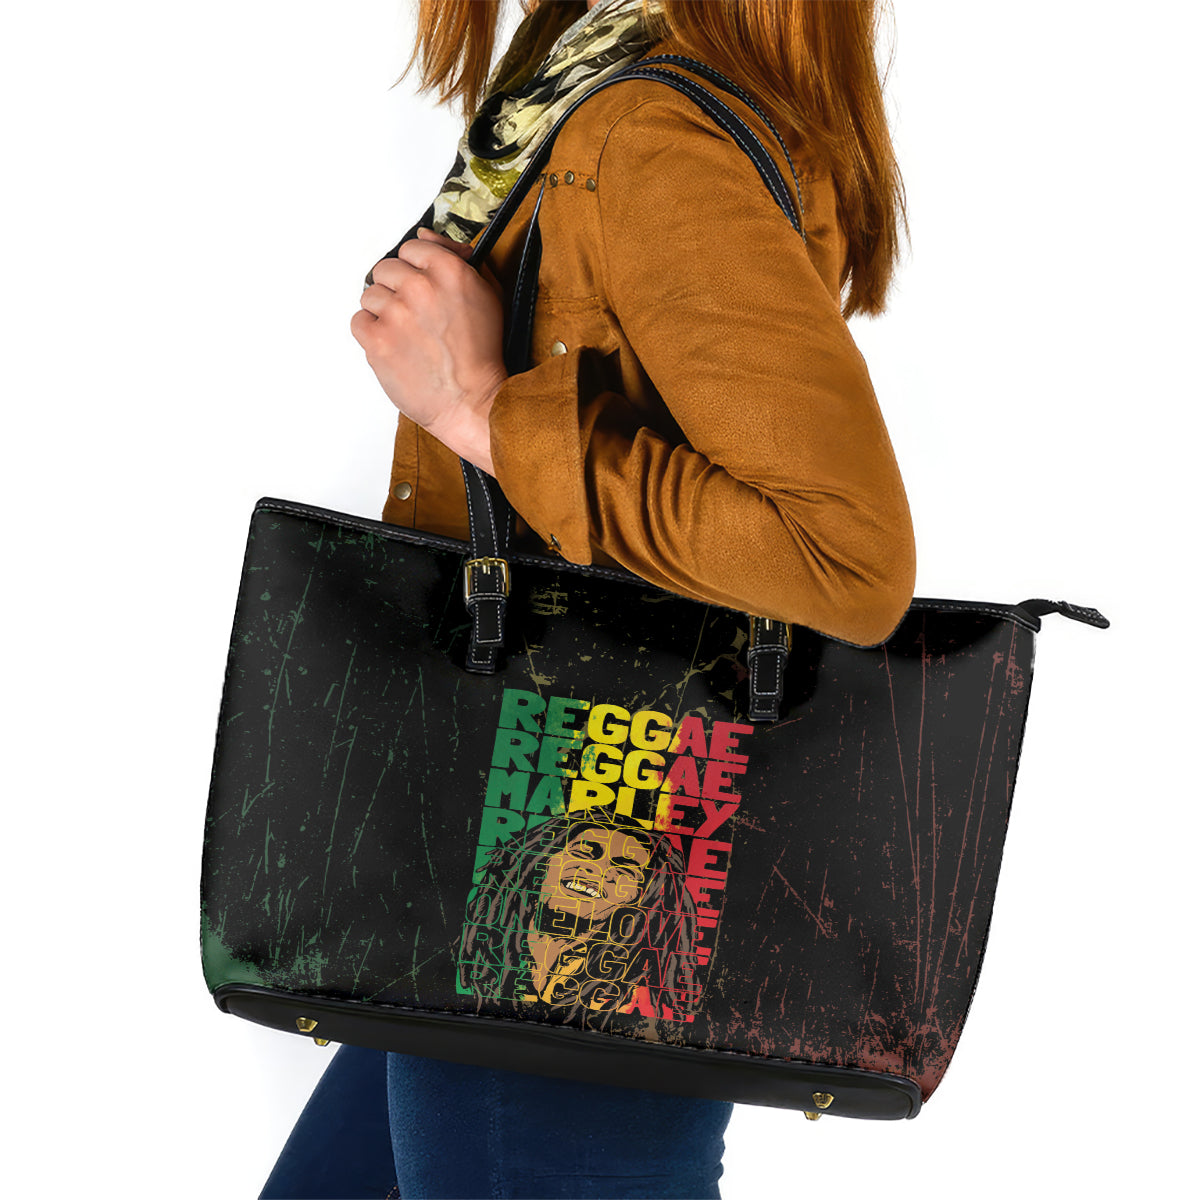 Reggae King Marley Leather Tote Bag Typeset Grunge Style